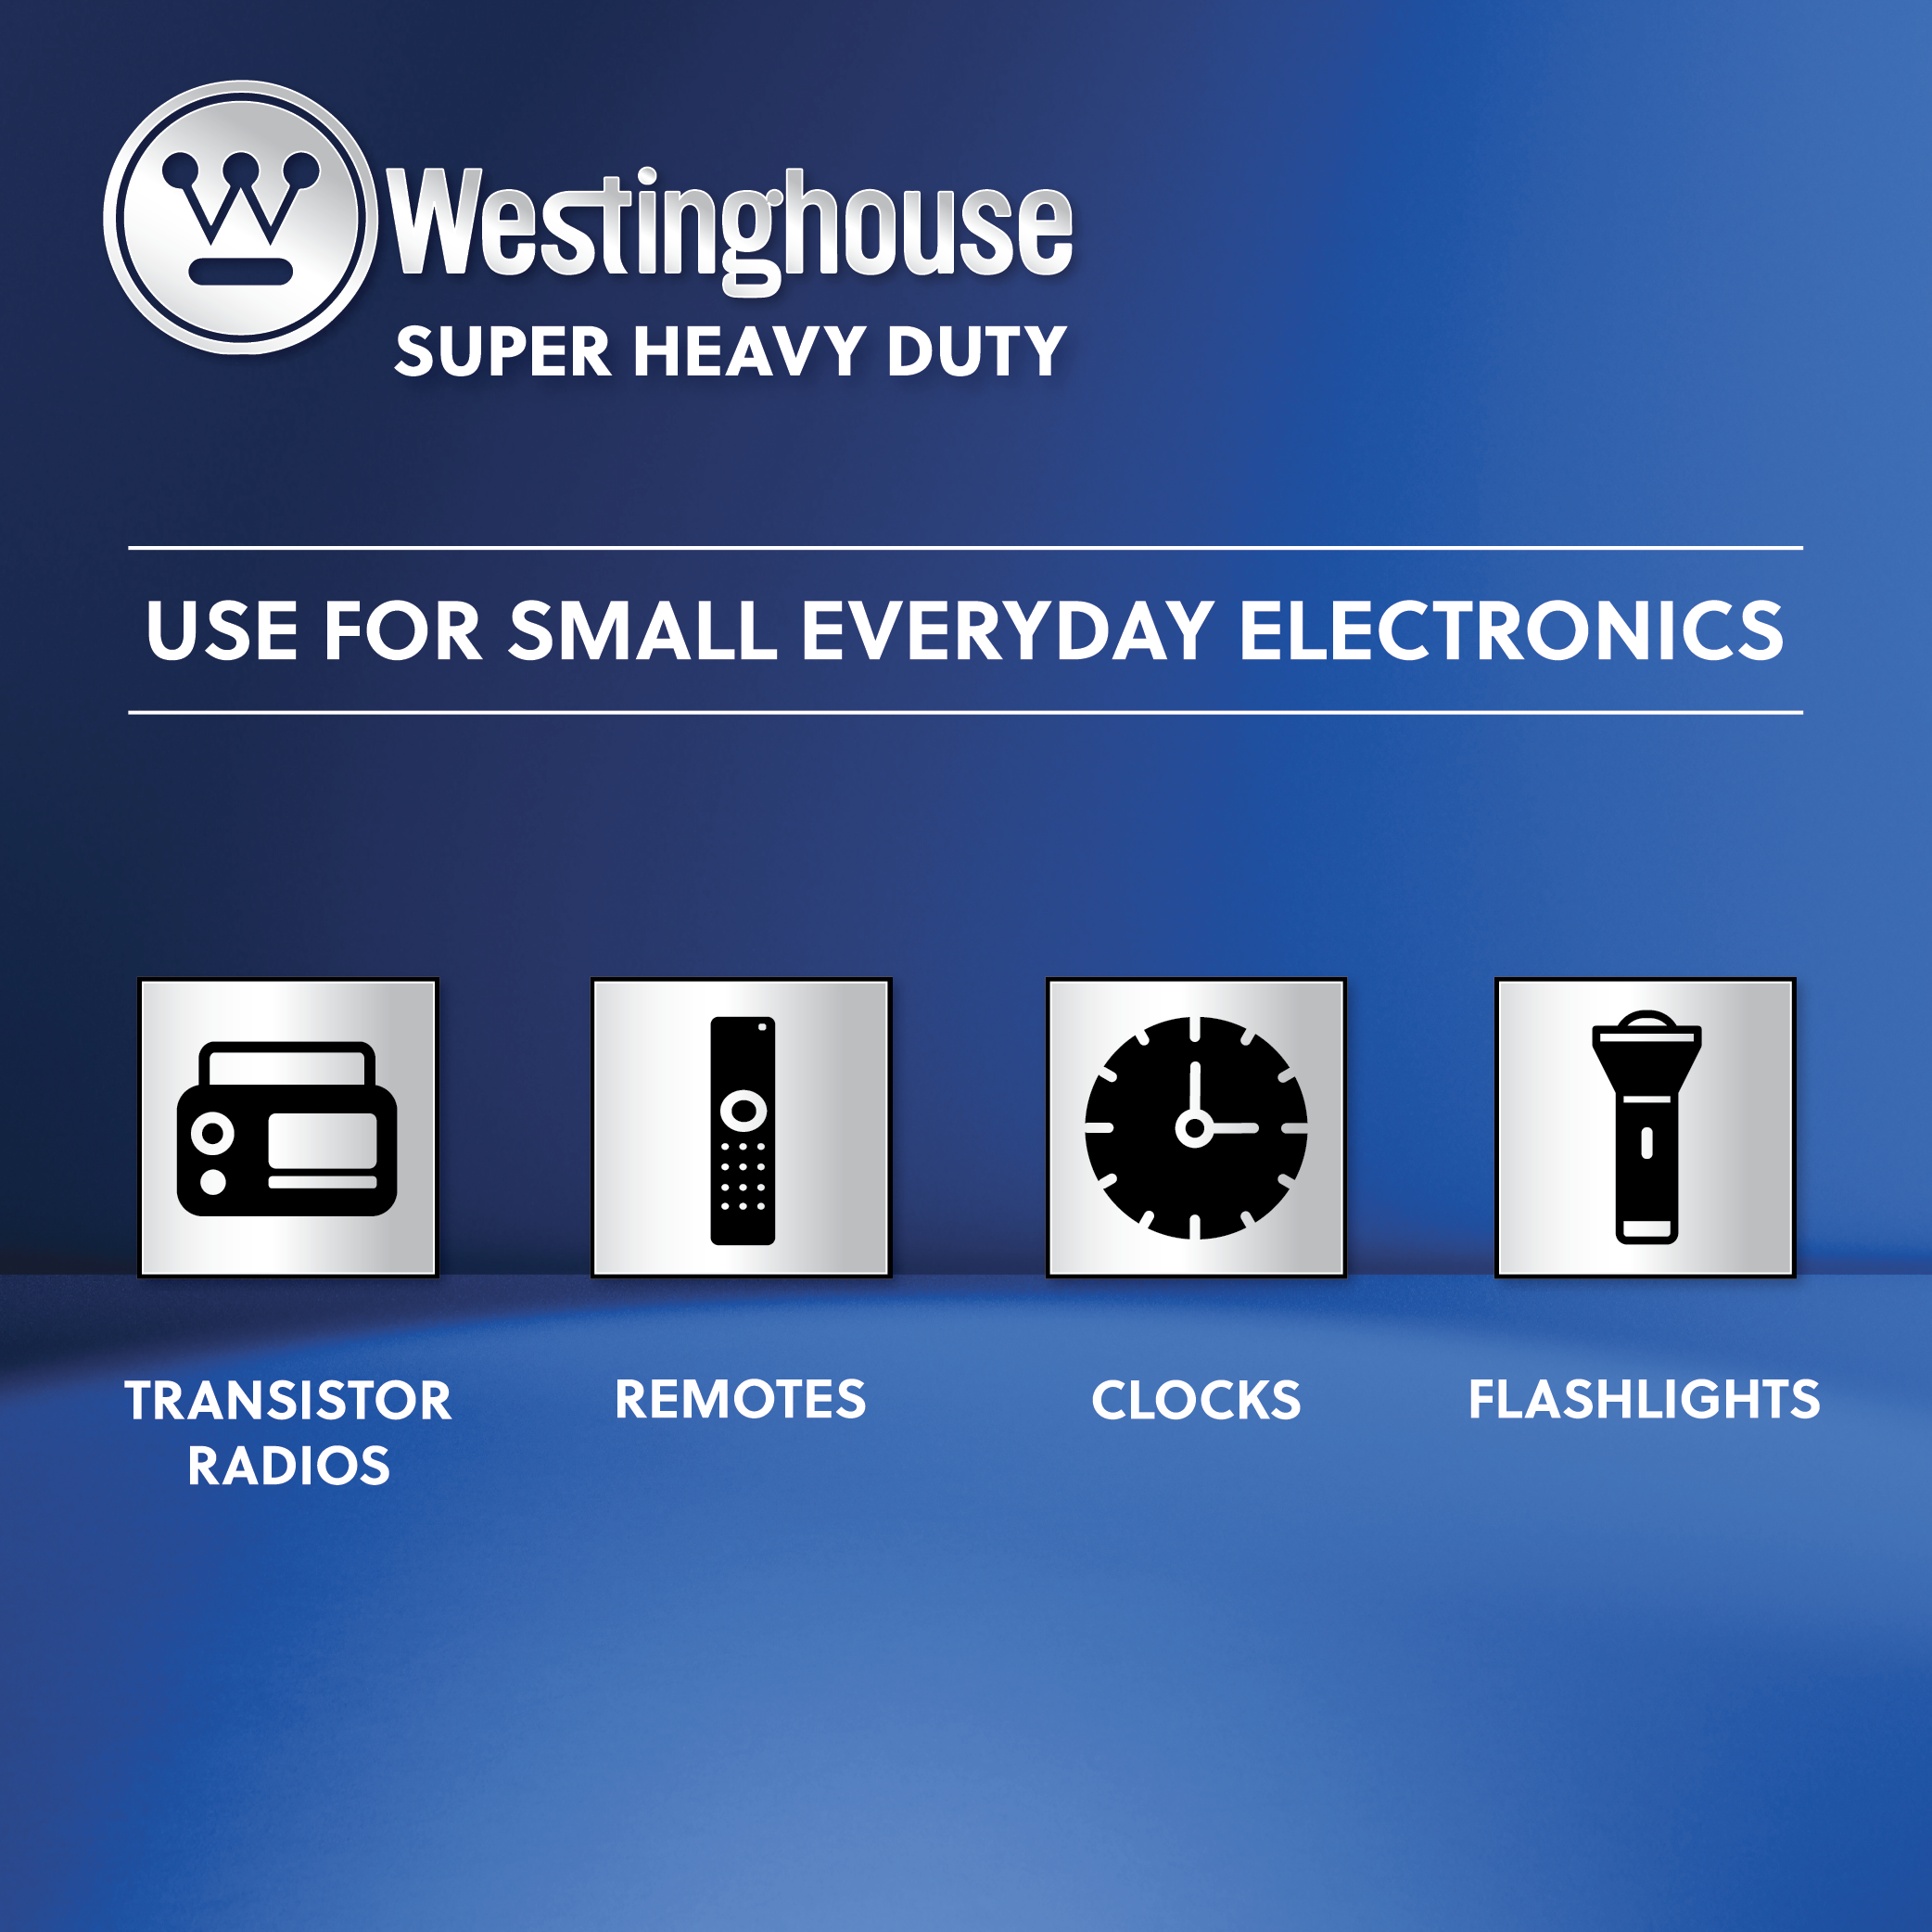 Westinghouse 9V Super Heavy Duty